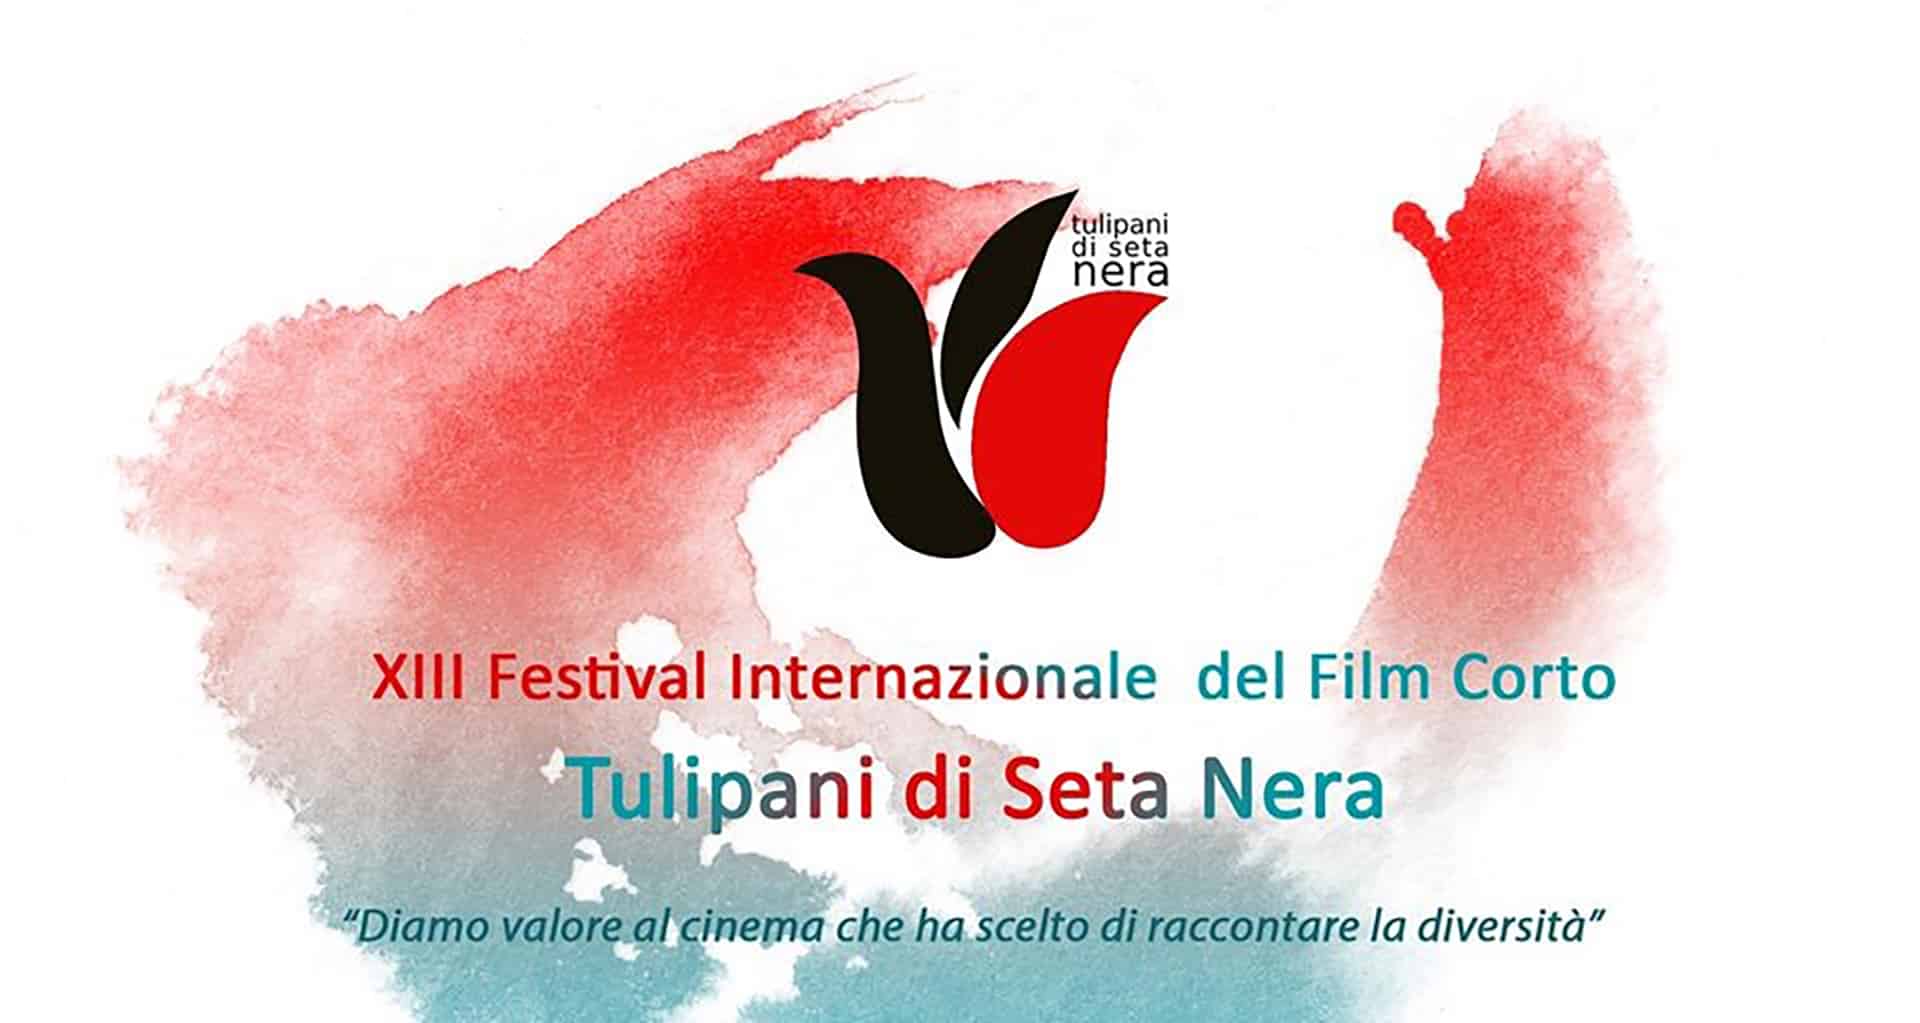 Tulipani di Seta Nera 2020 cinematographe.it